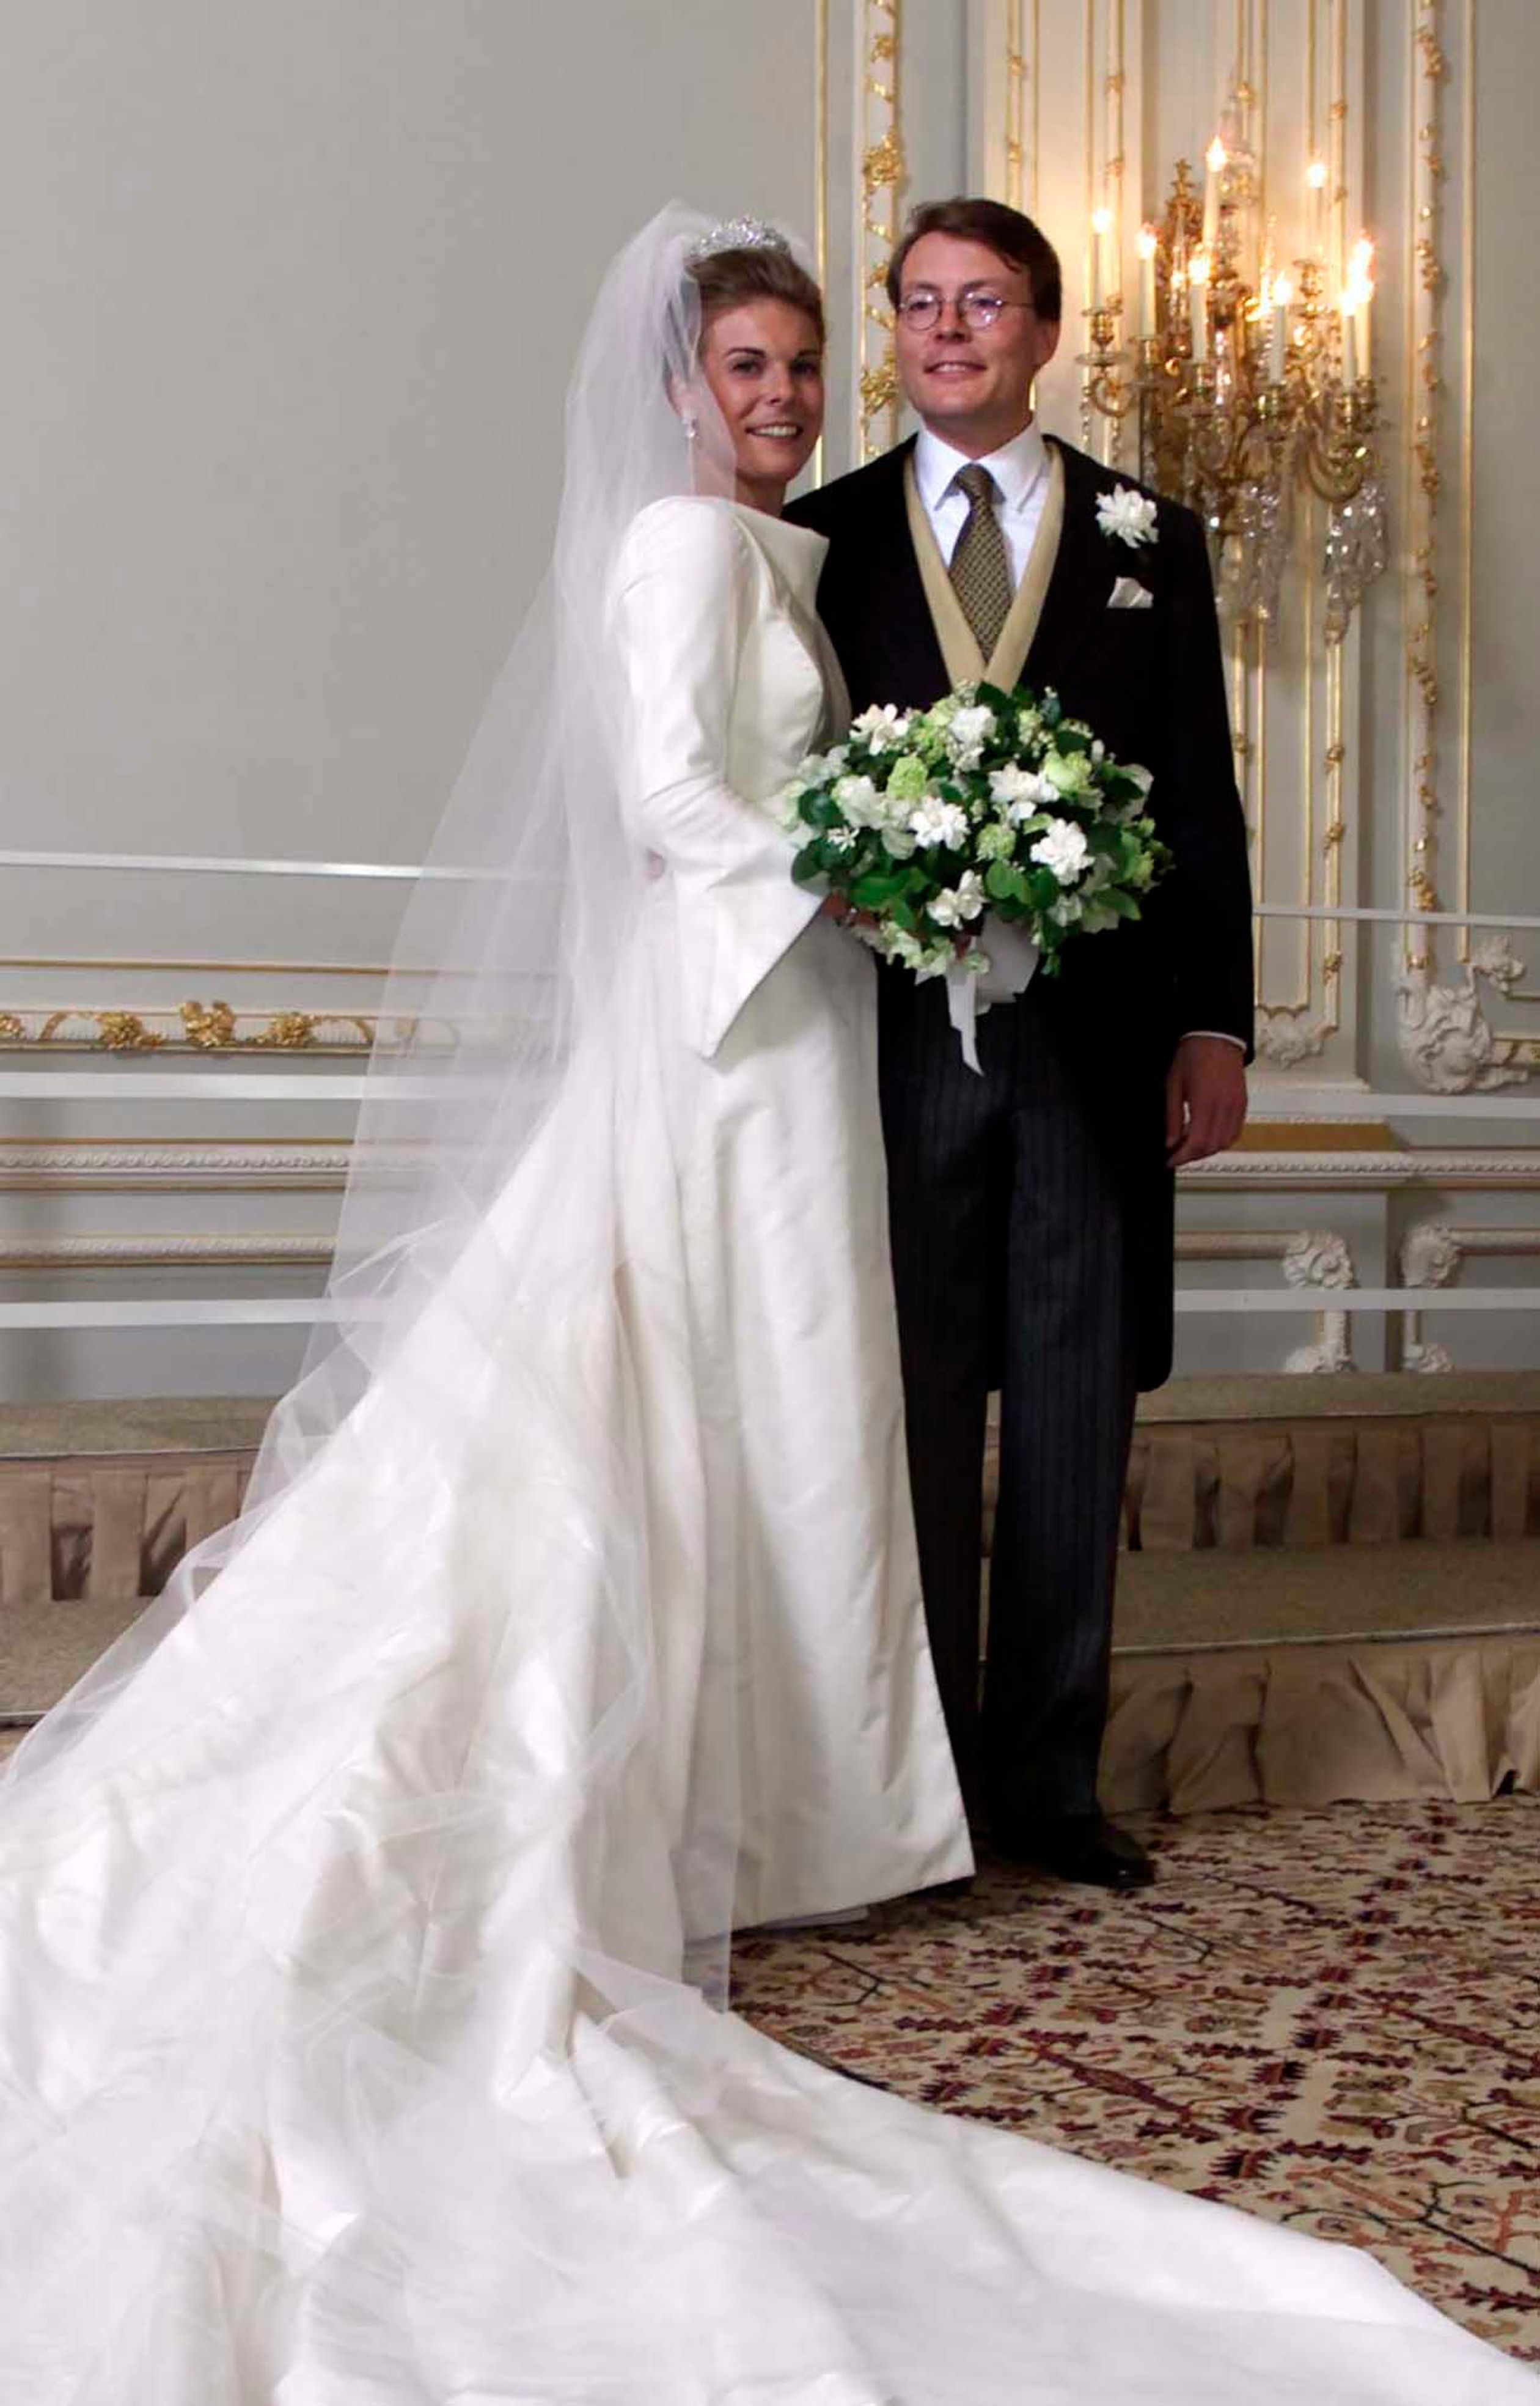 Ook prinses Laurentien koos in 2001 voor een jurk van Modehuis Natan.